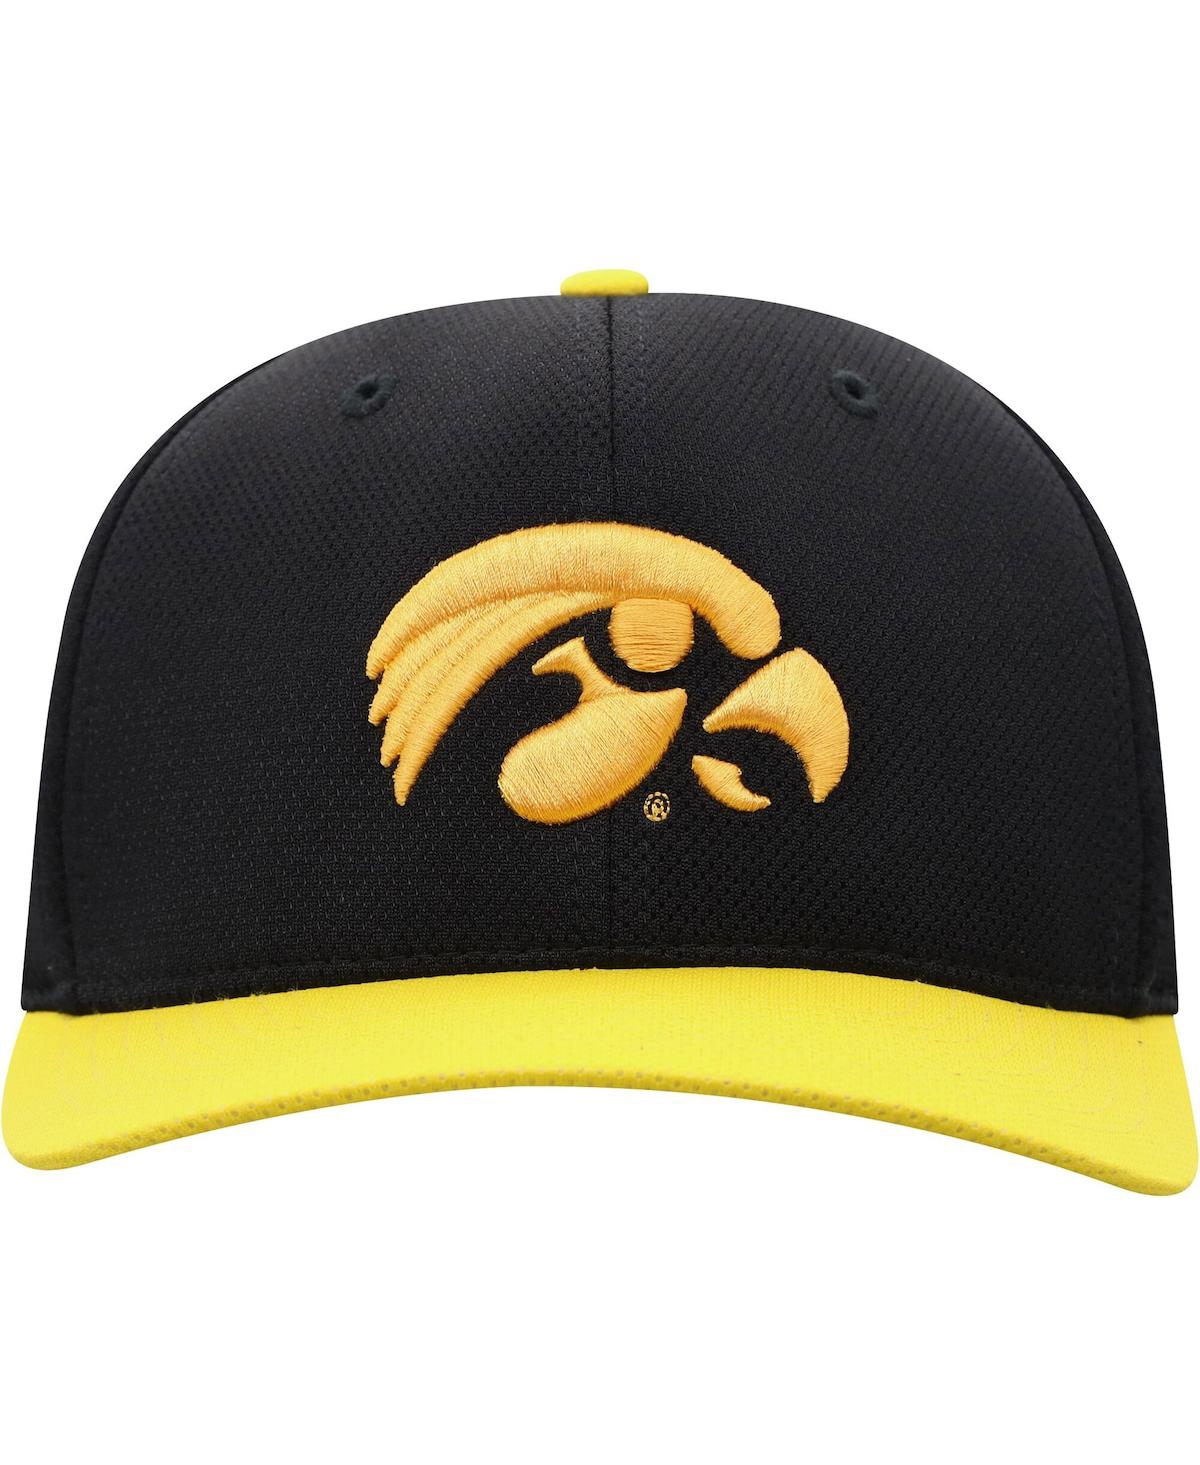 Shop Top Of The World Men's  Black, Gold Iowa Hawkeyes Two-tone Reflex Hybrid Tech Flex Hat